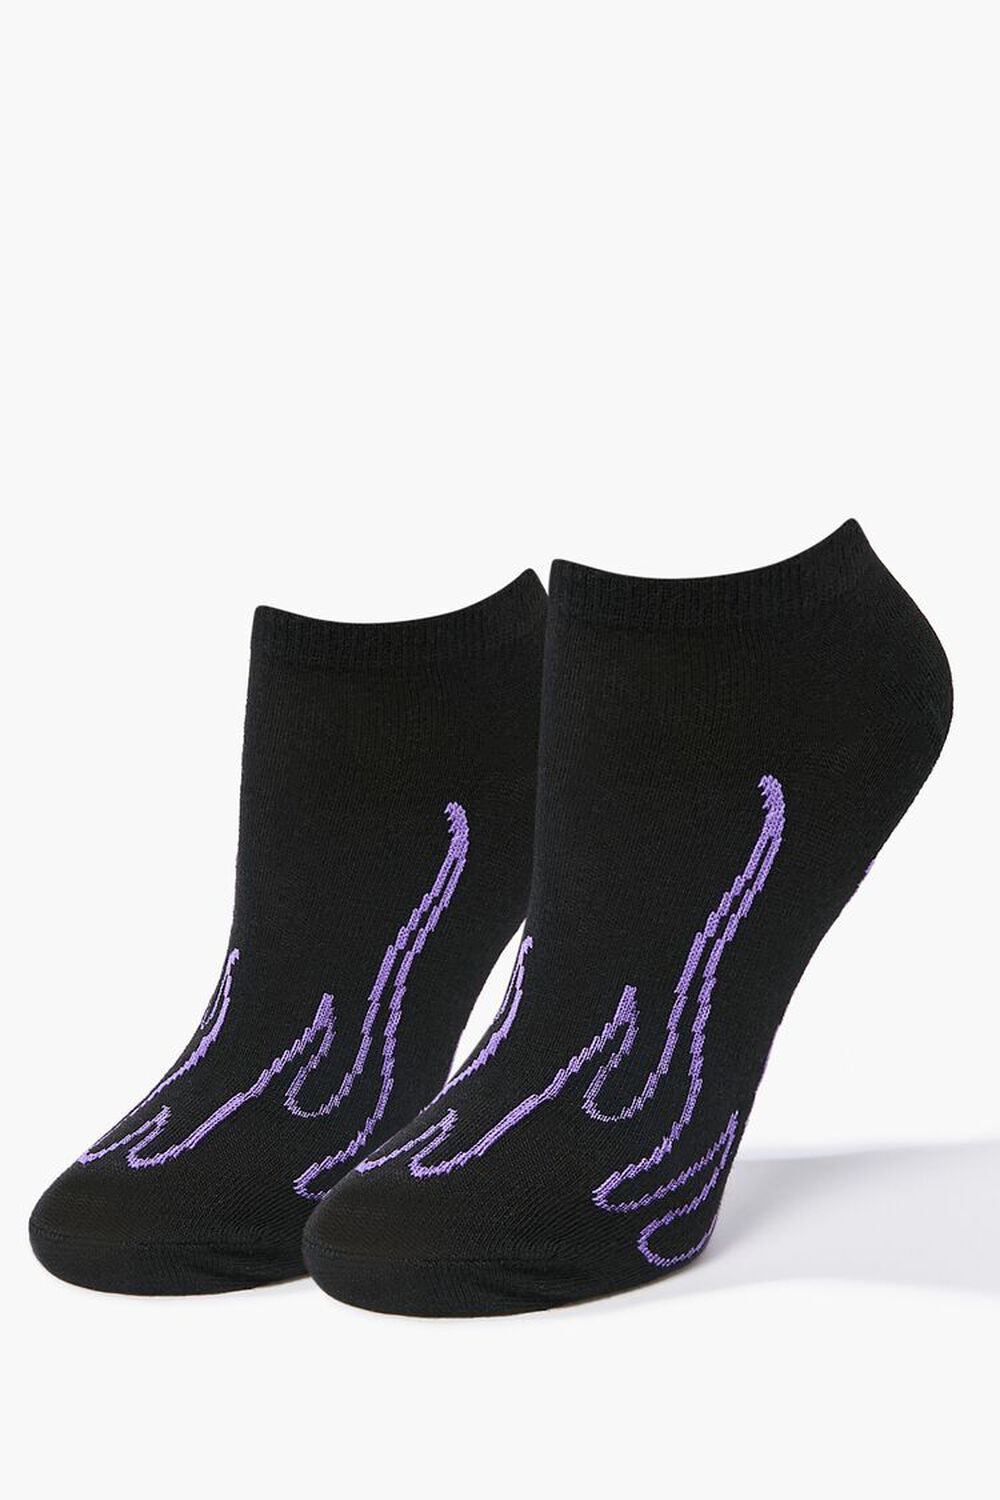 BLACK/PURPLE Flame Graphic Ankle Socks, image 1